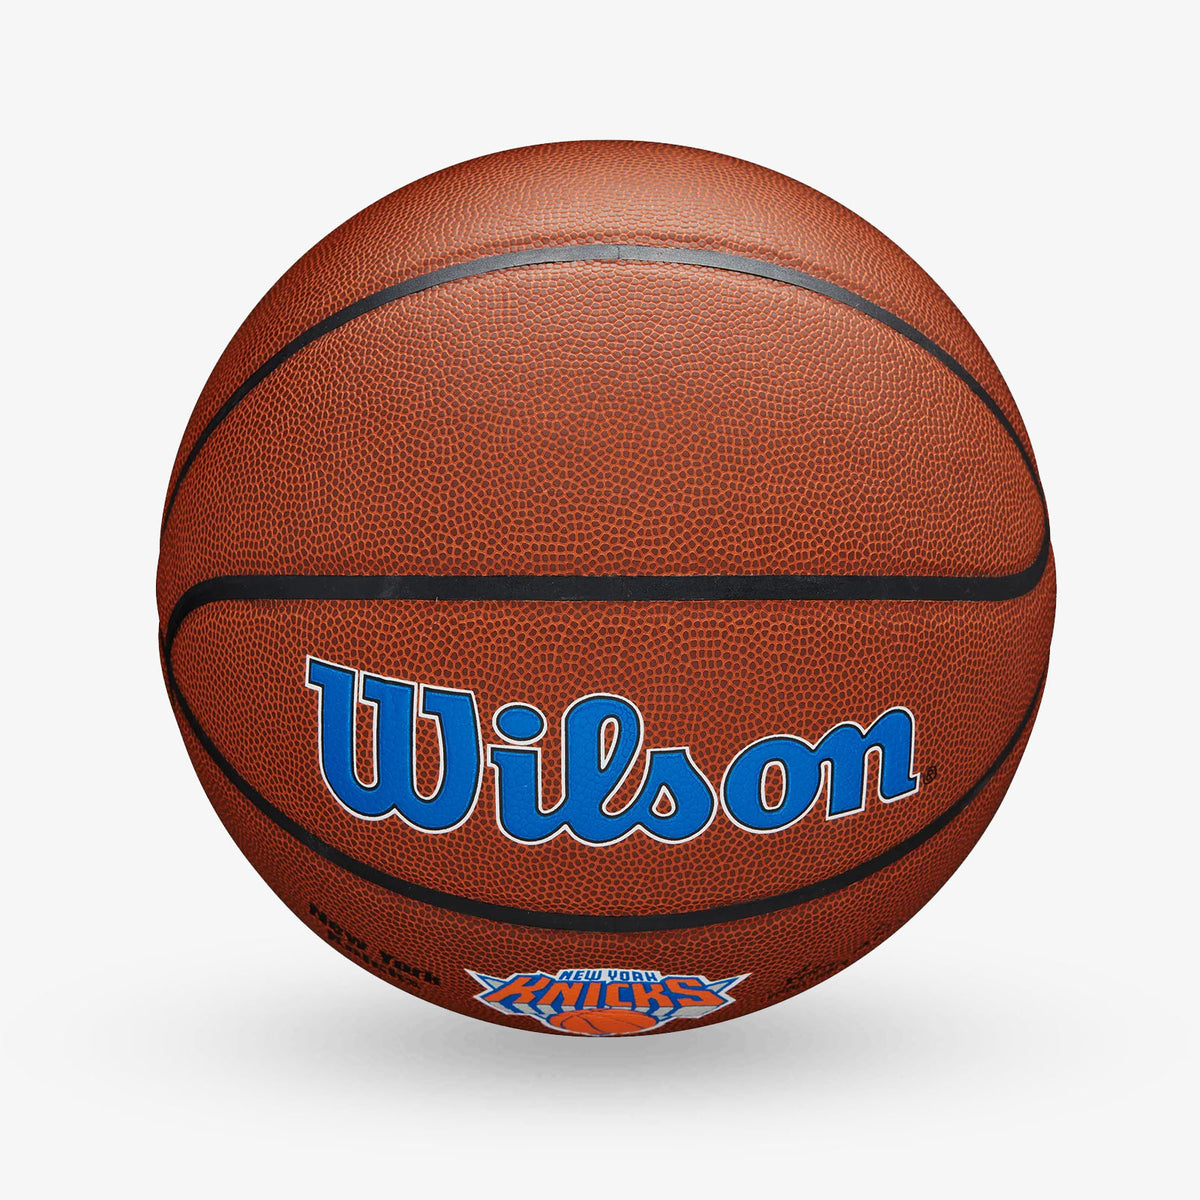 New York Knicks NBA Team Alliance Basketball - Size 7